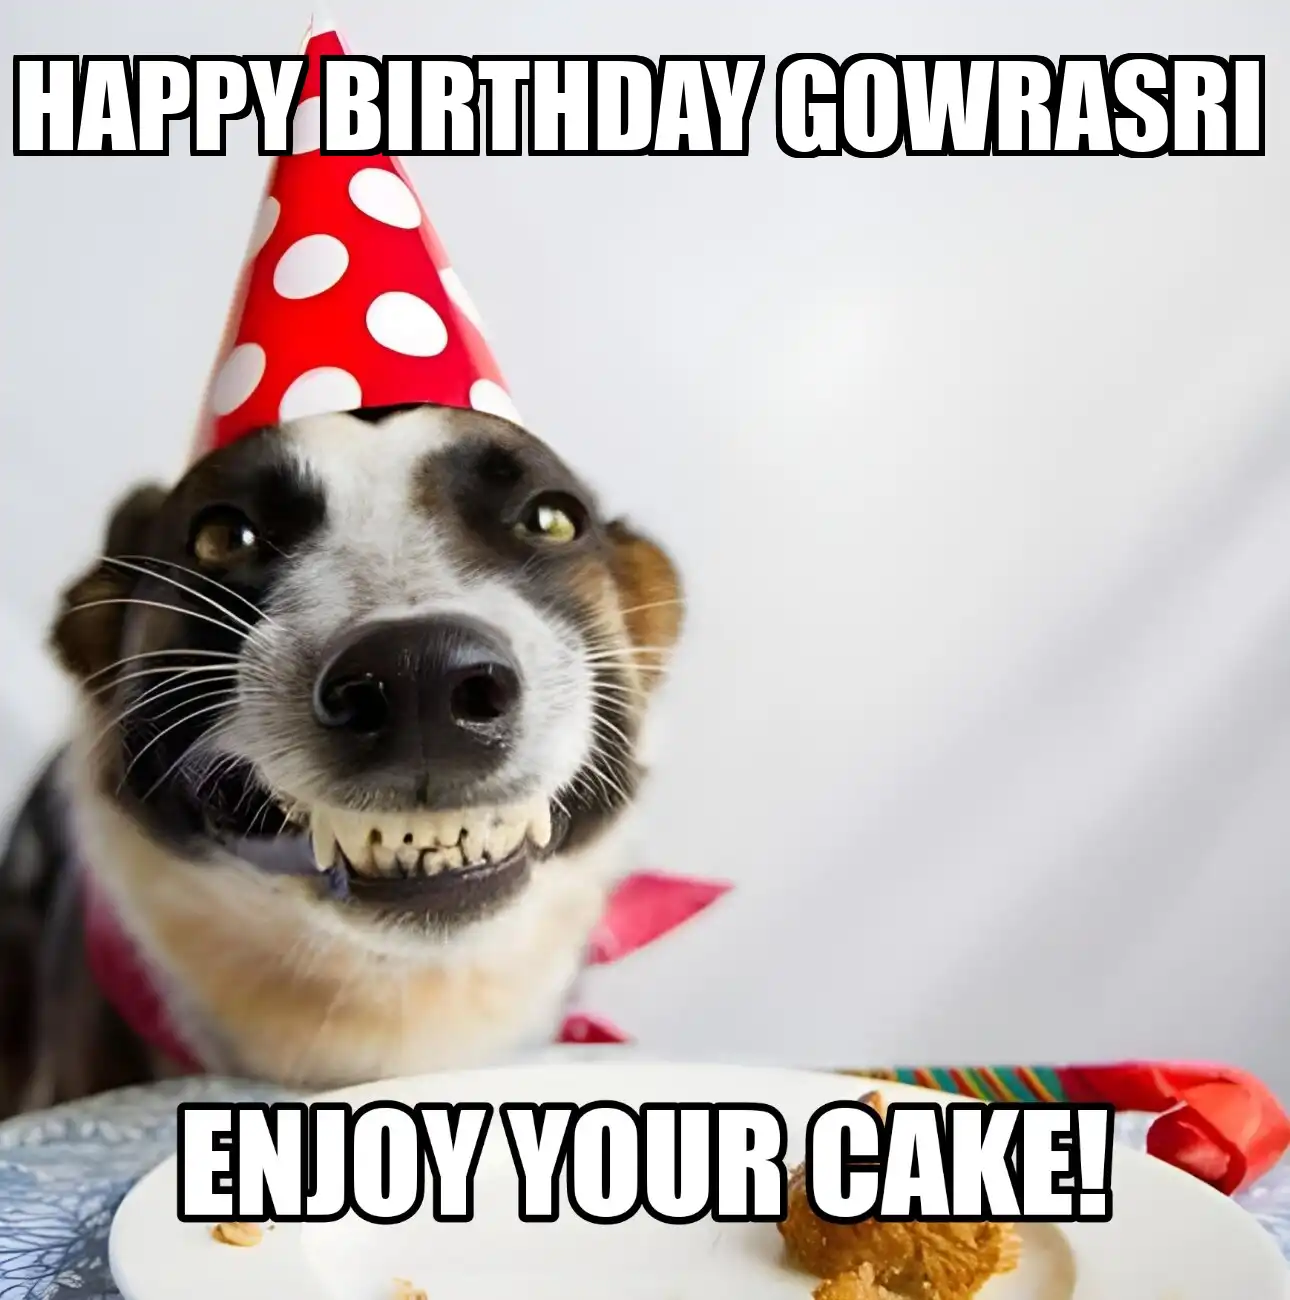 Happy Birthday Gowrasri Enjoy Your Cake Dog Meme